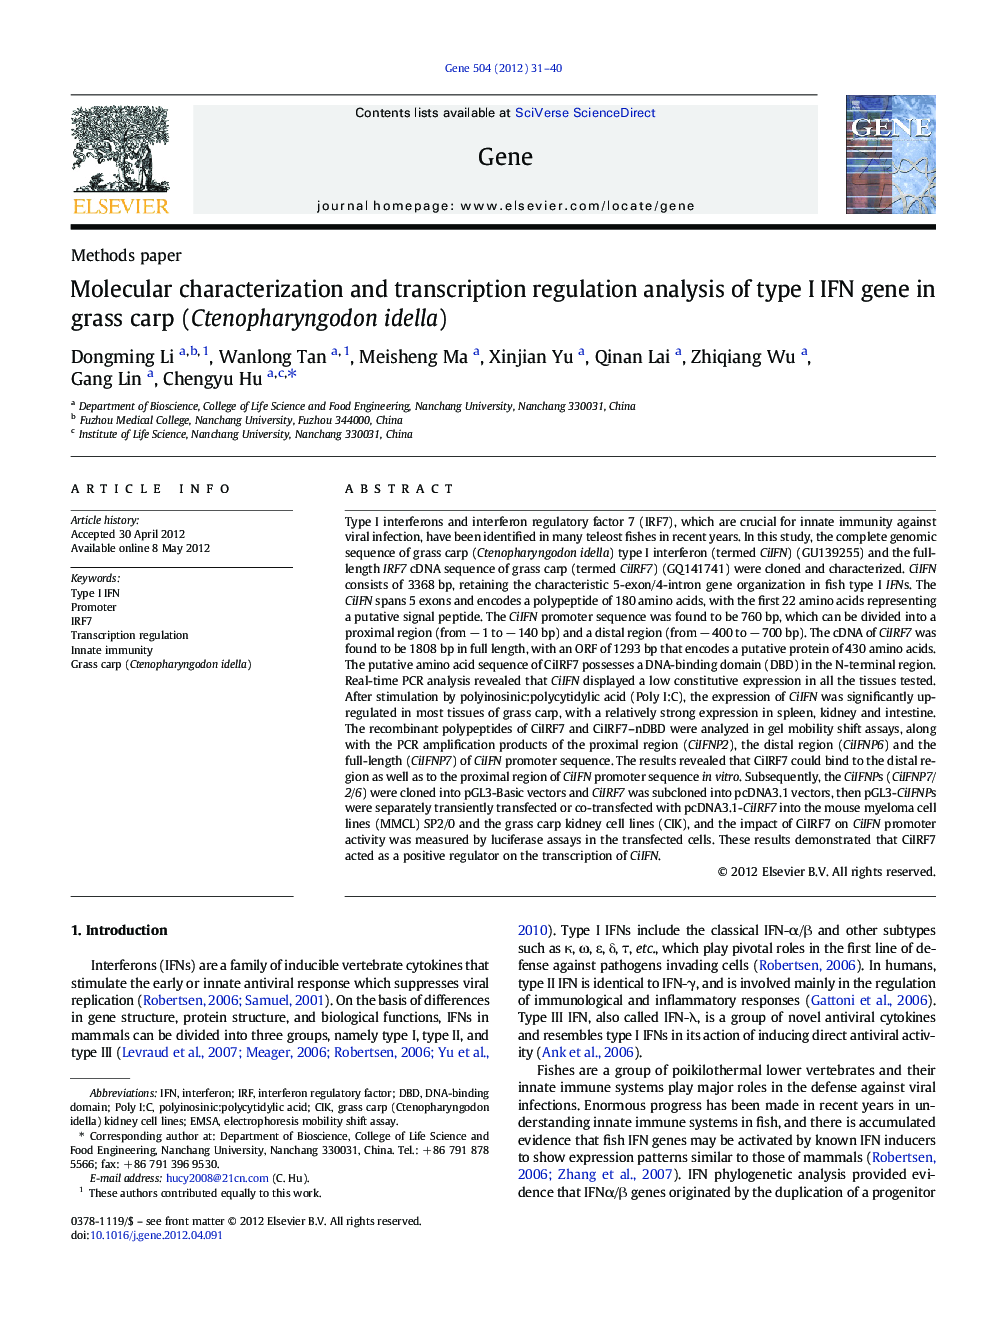 Molecular characterization and transcription regulation analysis of type I IFN gene in grass carp (Ctenopharyngodon idella)